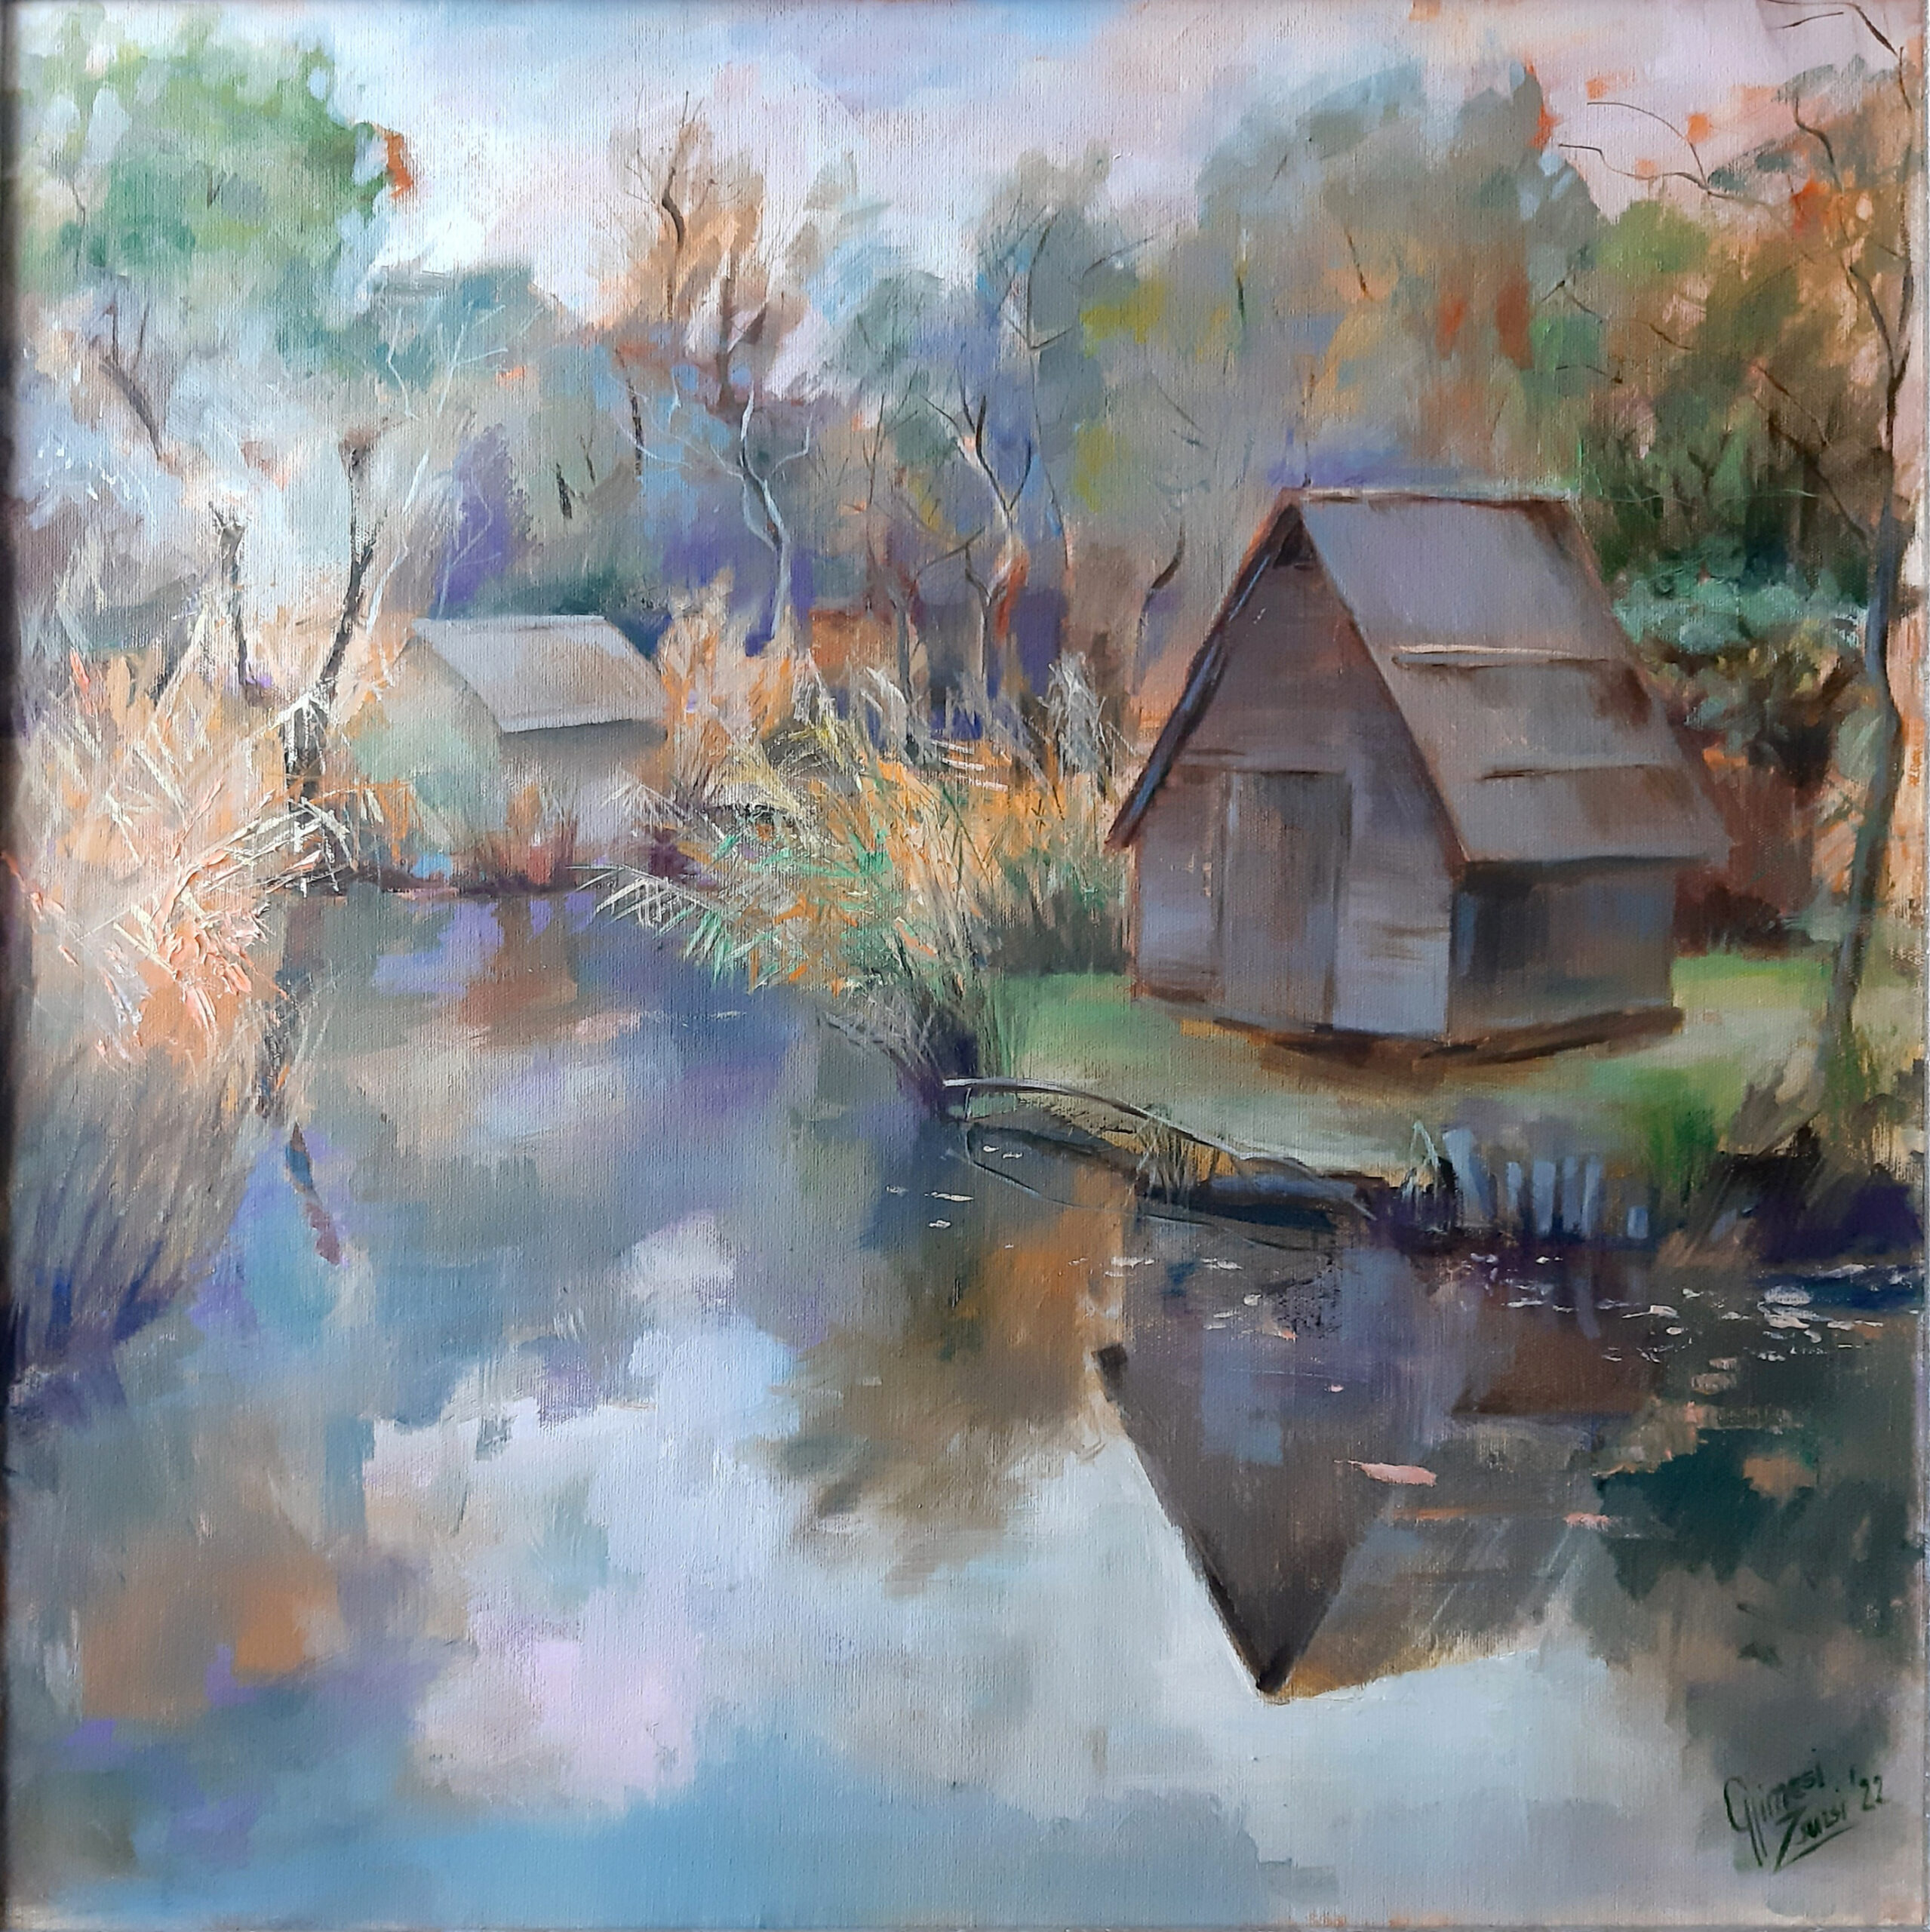 Lake Fairy Tale
60x60 cm, oil/canvas